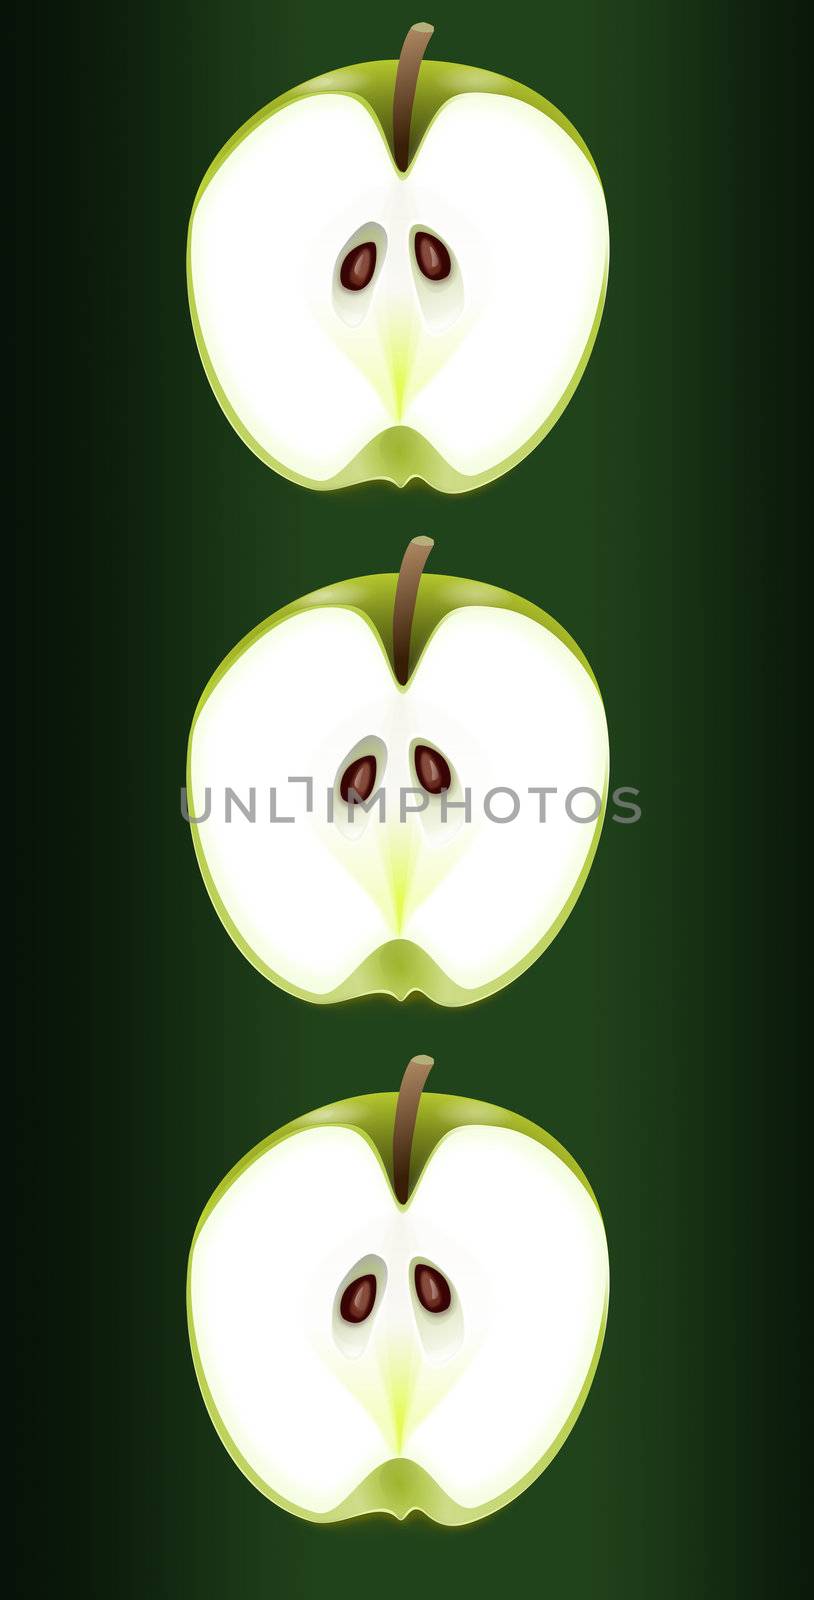 Illustration depicting three fresh apple halves arranged vertically over dark green background.